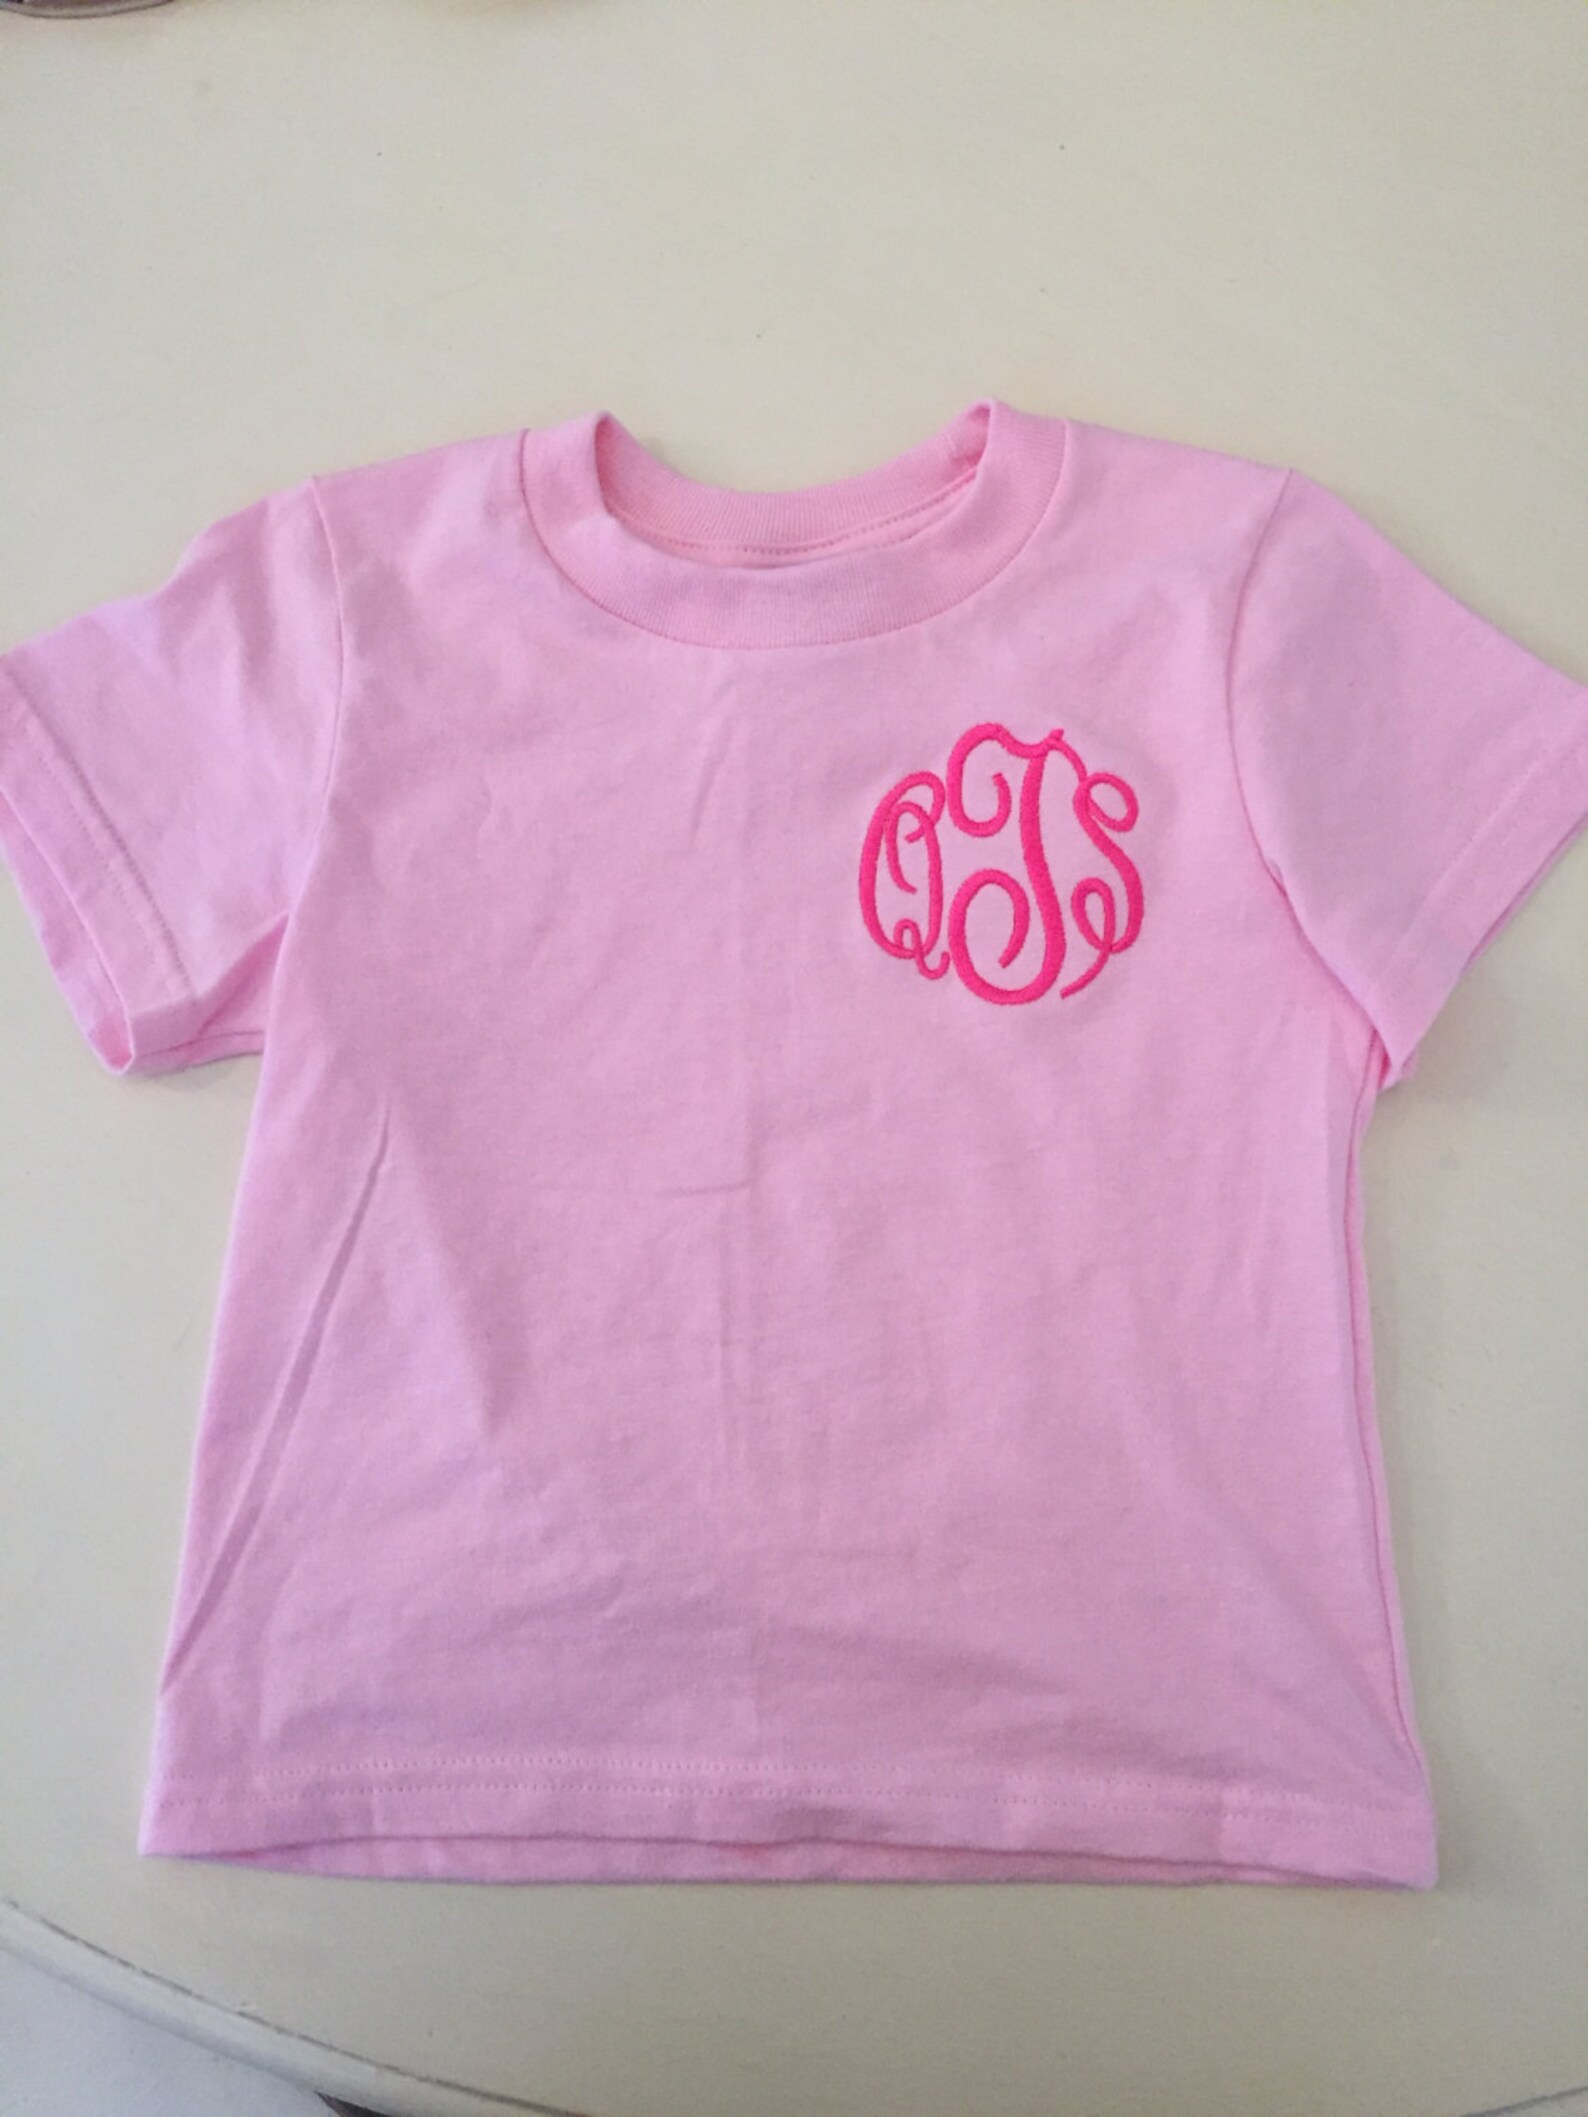 Monogrammed Infant/toddler Tshirt - Etsy